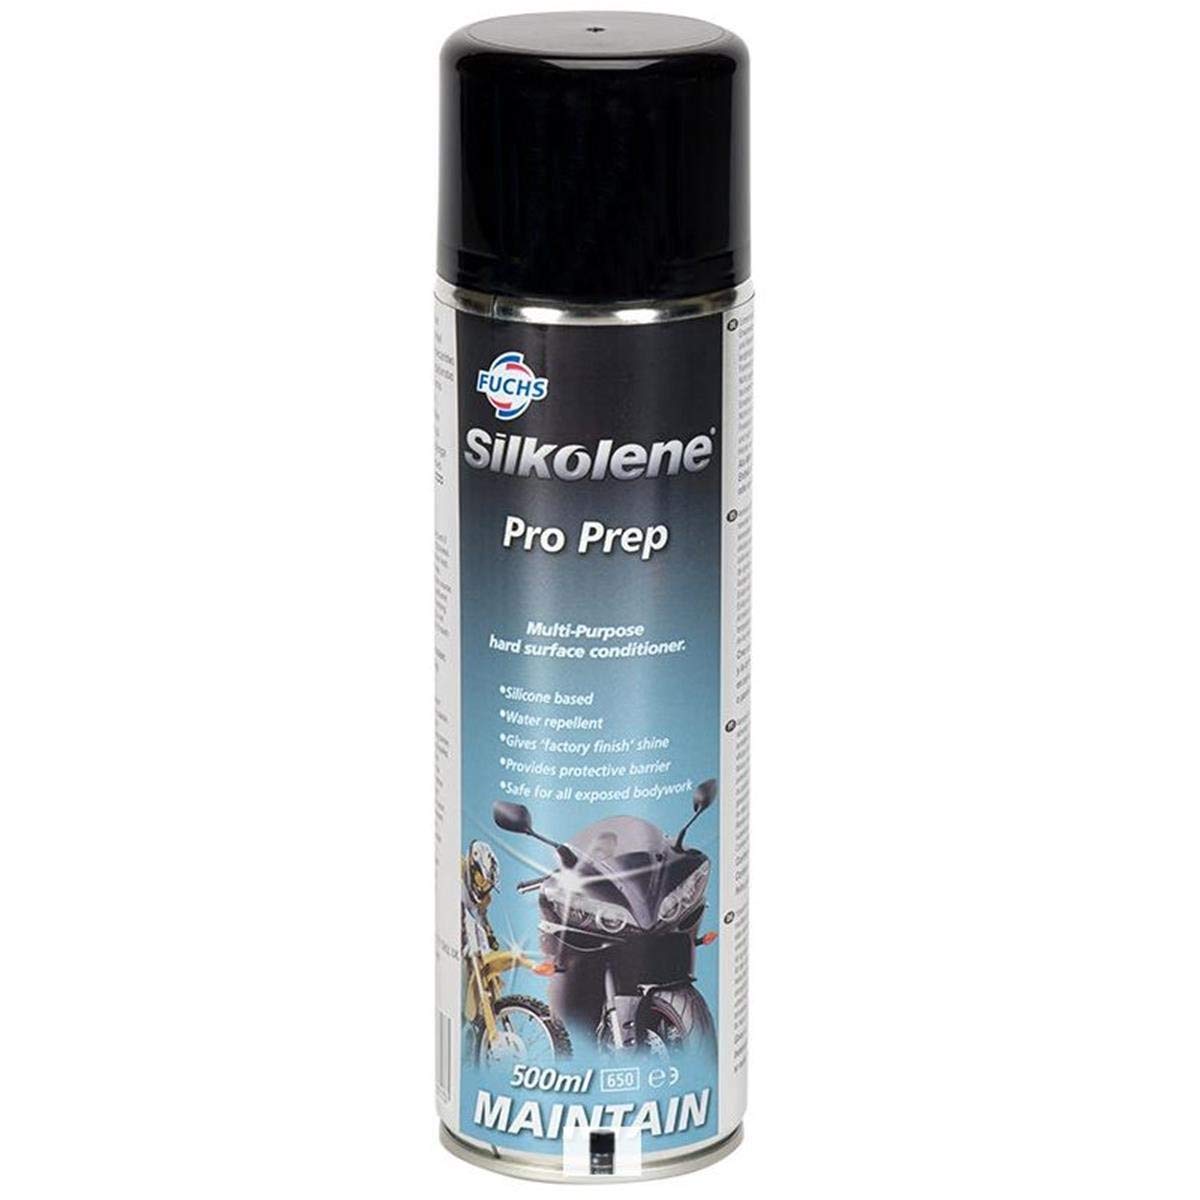 Fuchs Silkolene Pro Prep Spray 500 ml